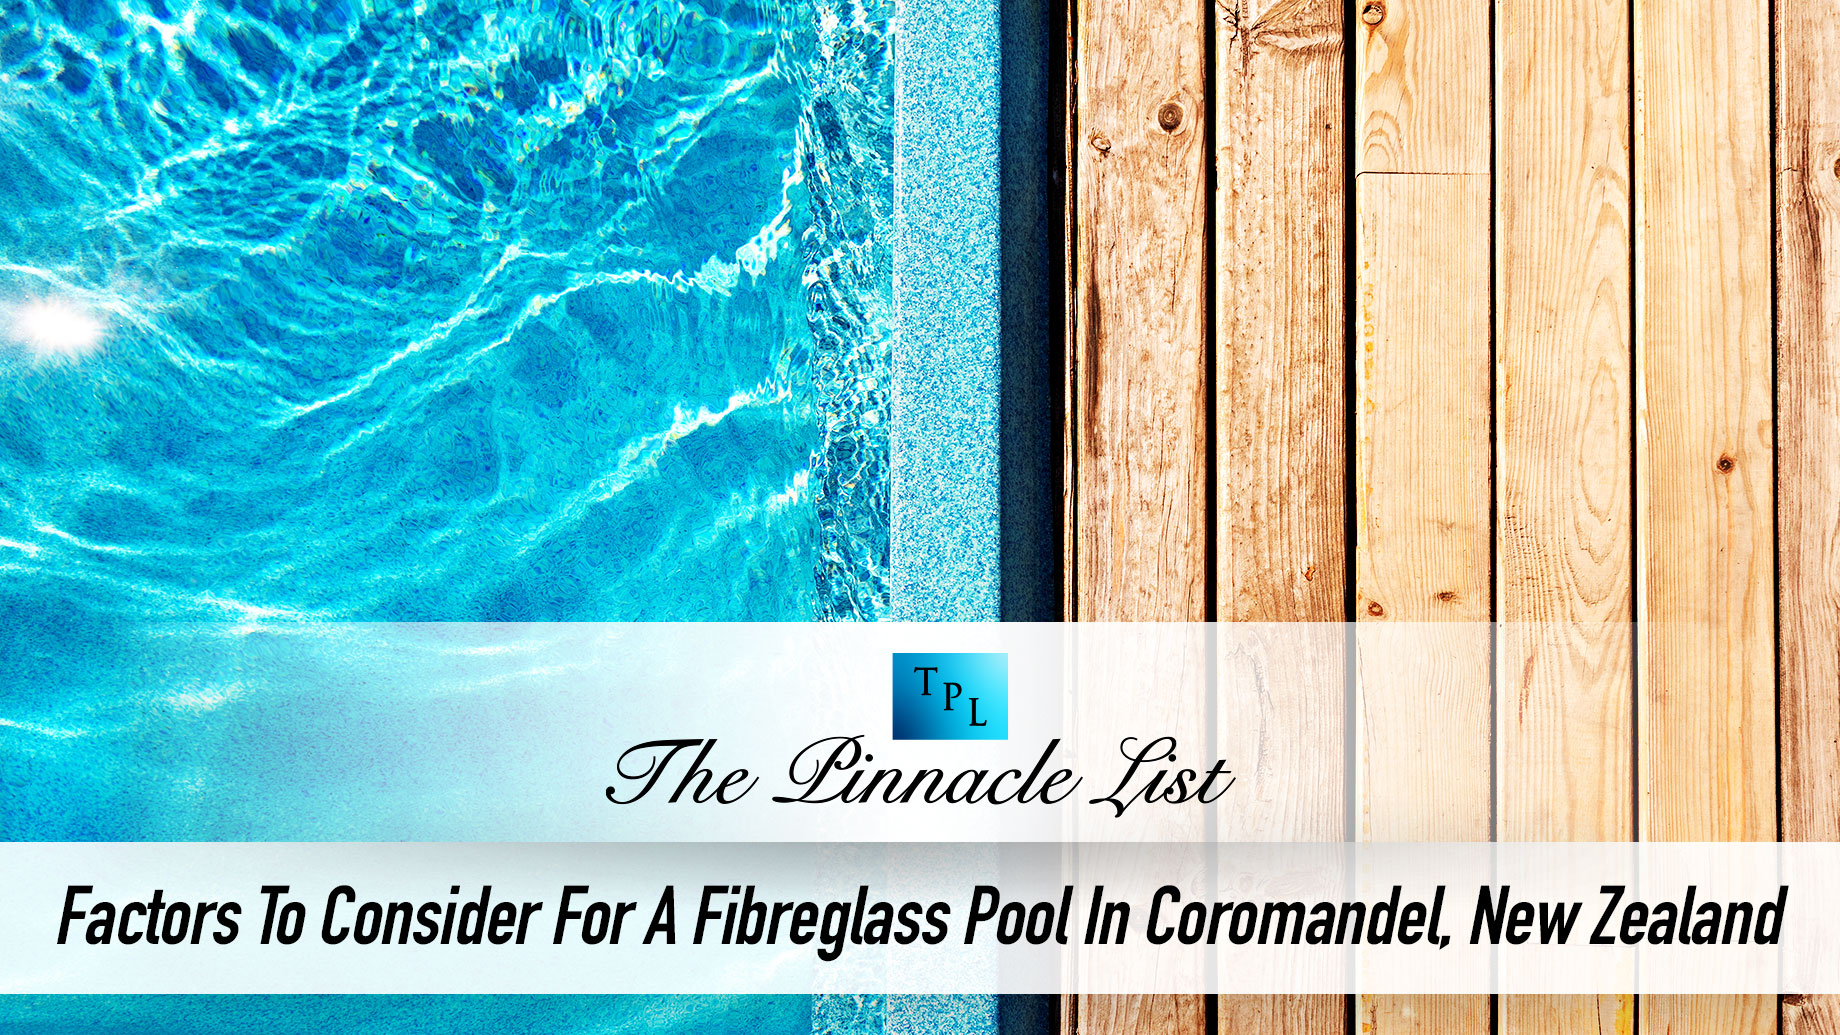 Factors To Consider When Selecting A Fibreglass Pool In Coromandel, New Zealand